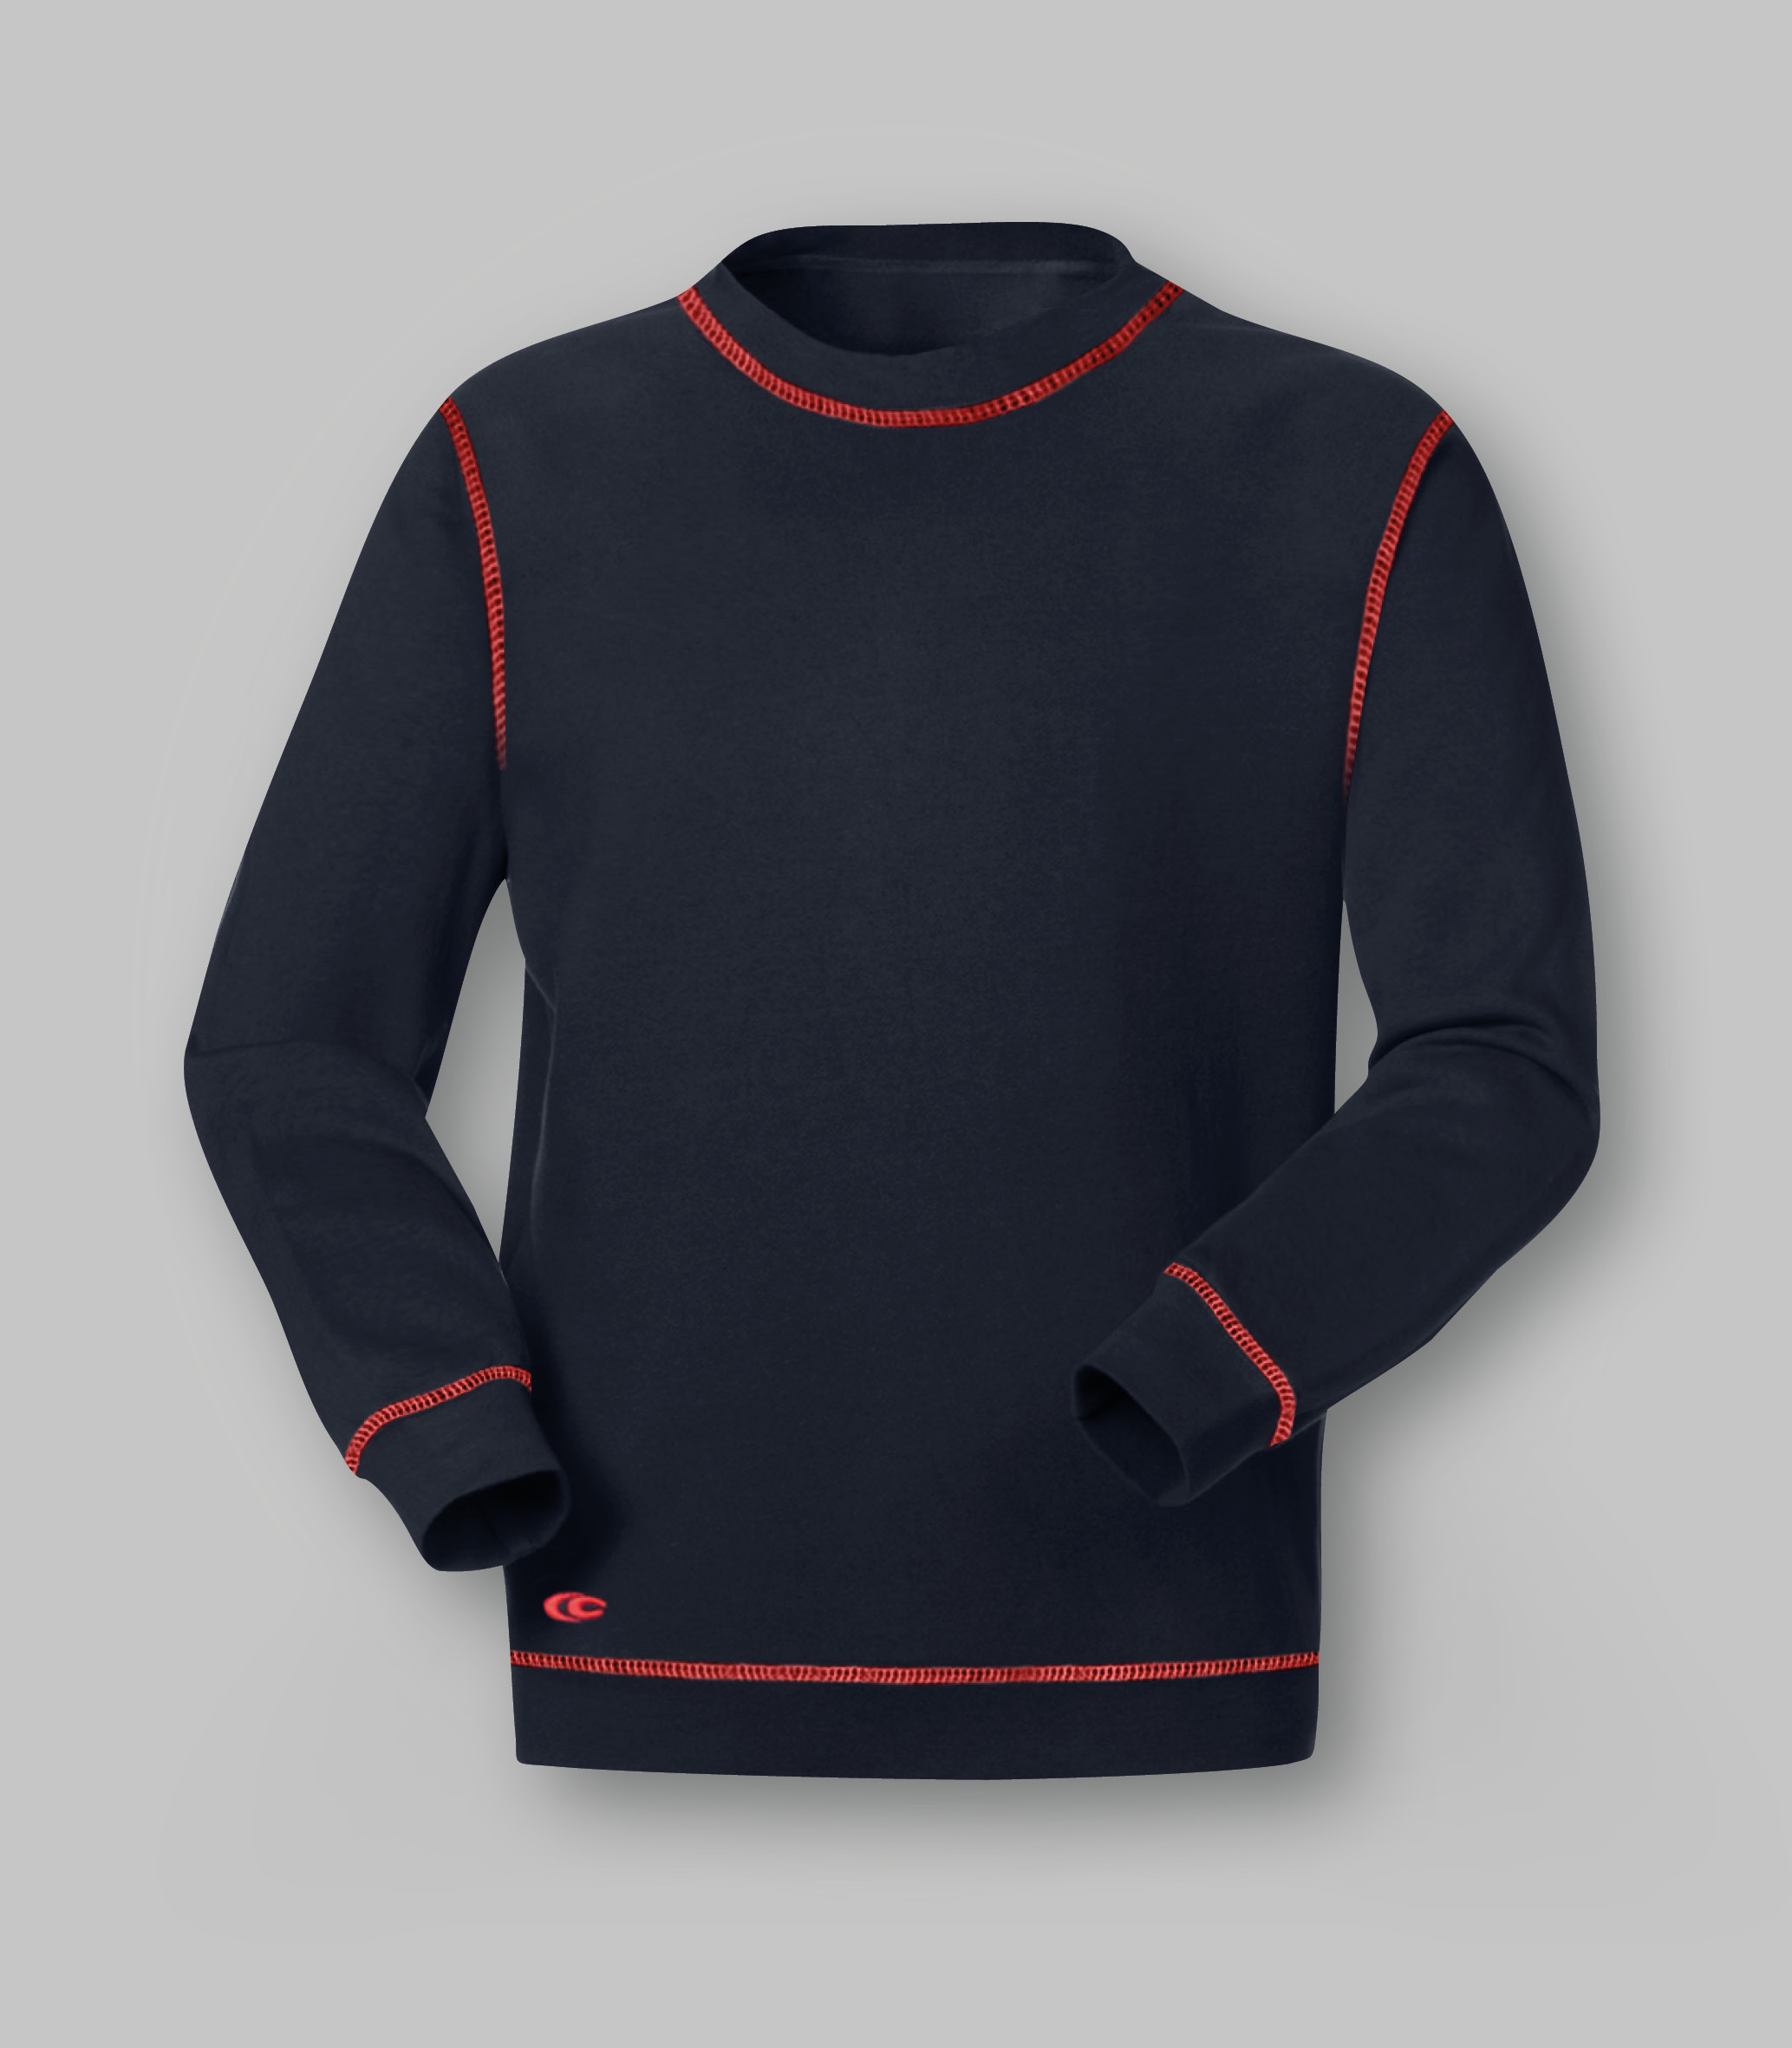 Flame retardant and antistatic sweatshirt-abbigliamentocertificato.com